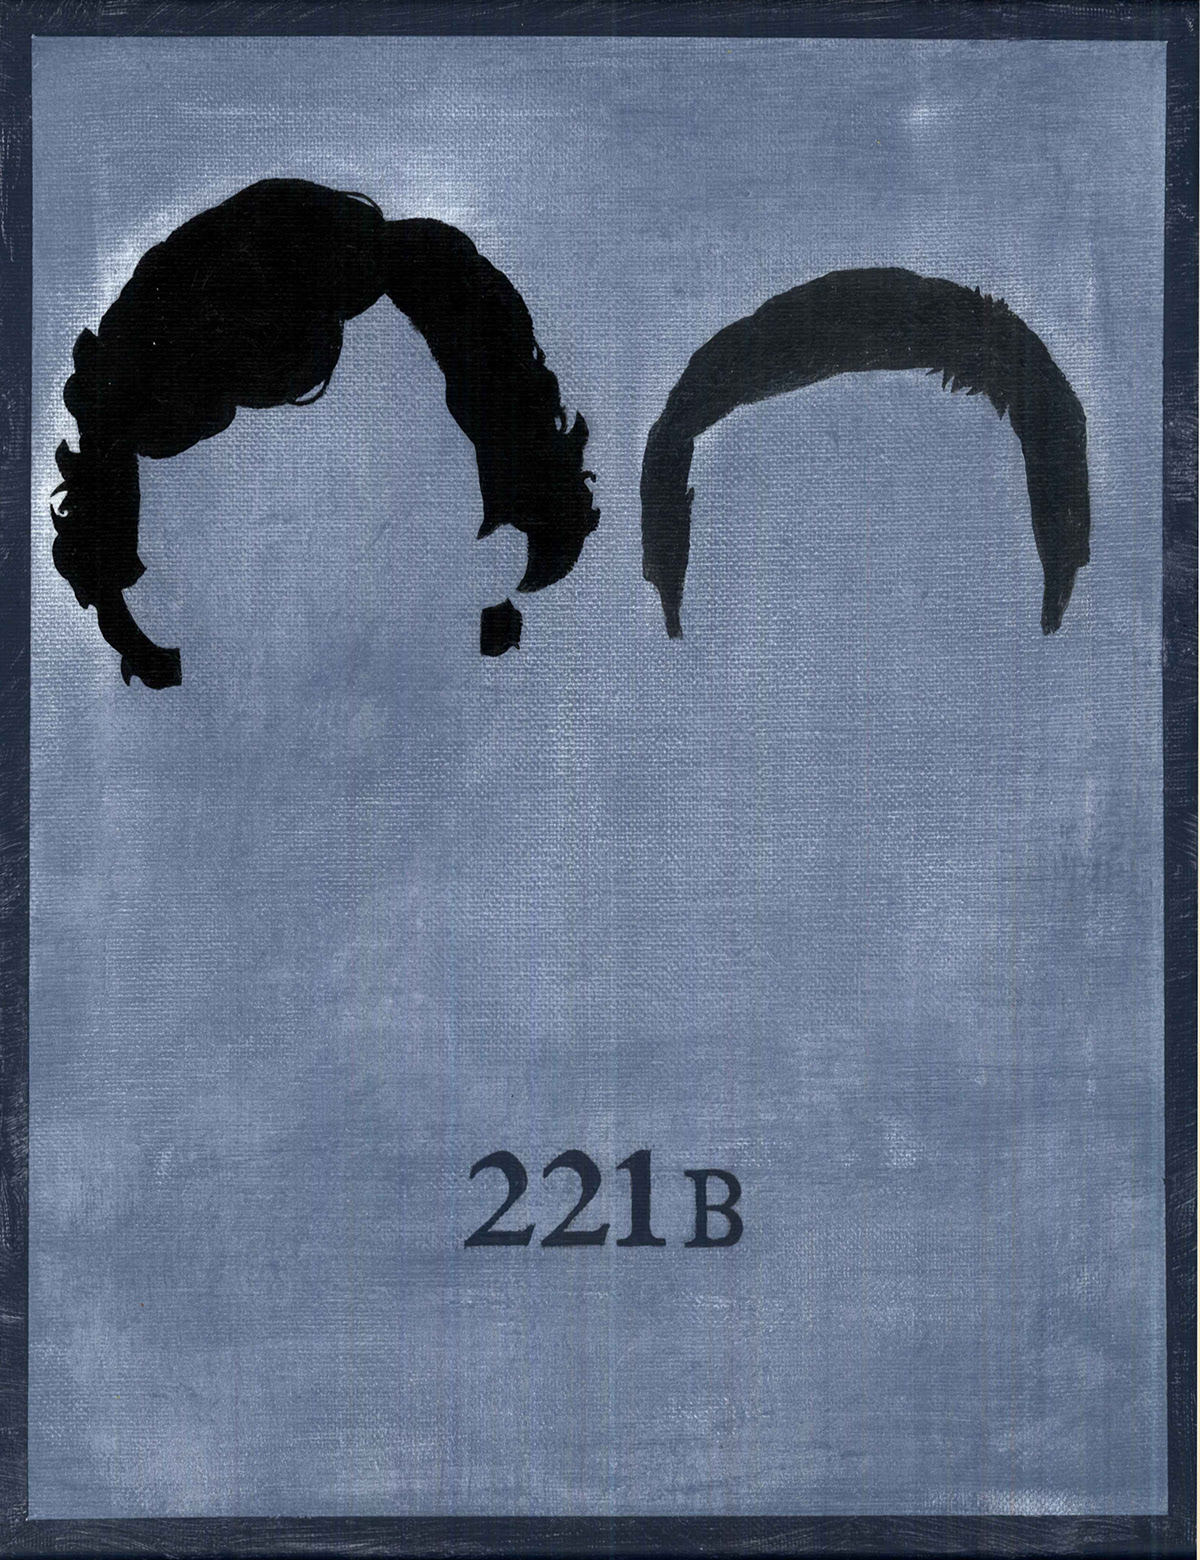 BBC Benedict Cumberbatch martin freeman Sherlock Holmes John Watson 221b Distressed